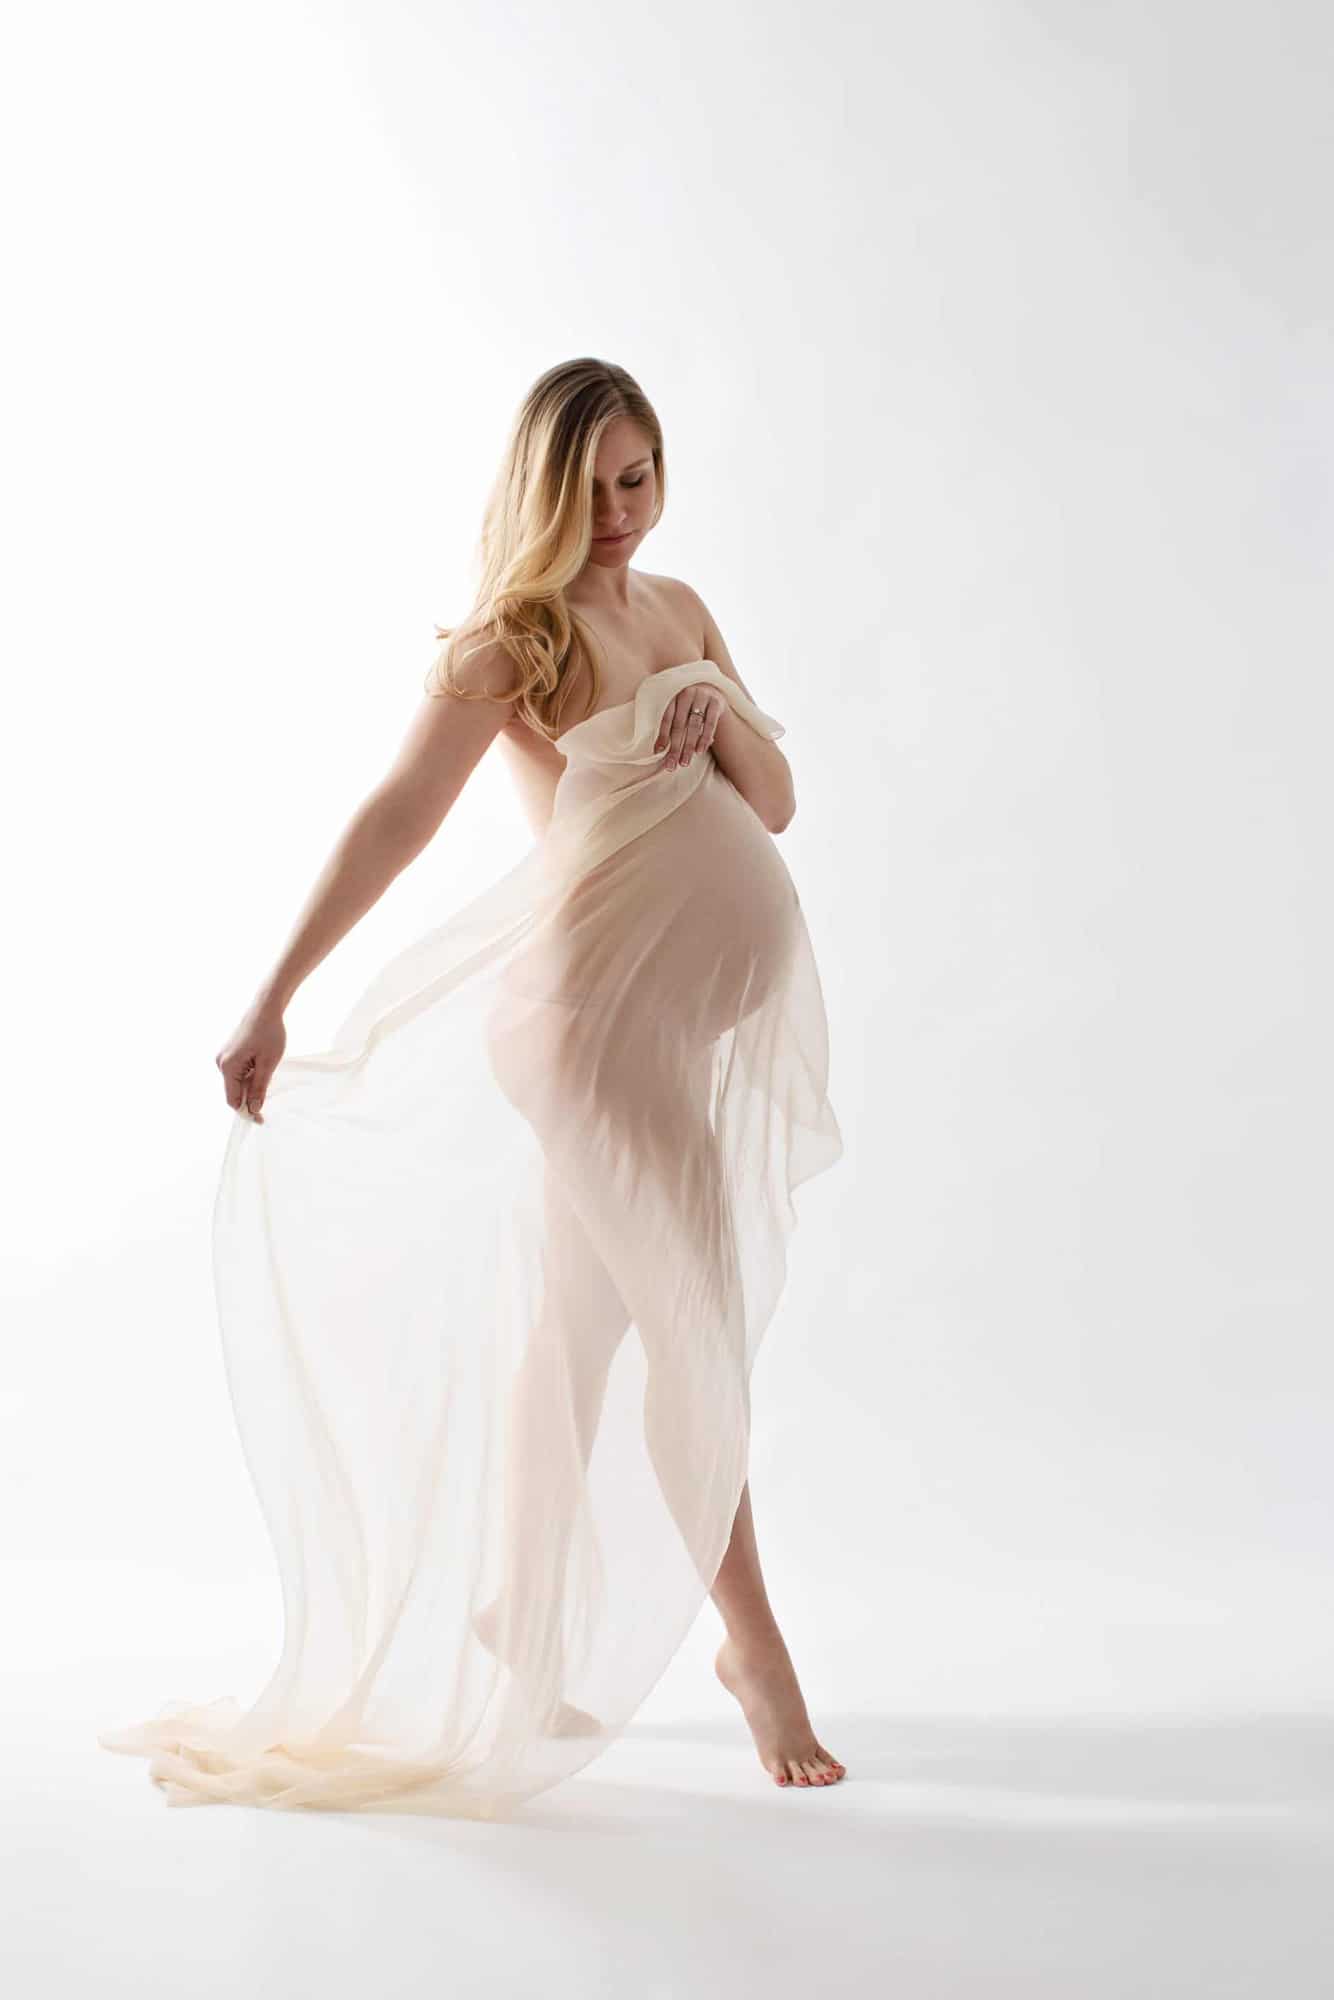 A pregnant woman walks in a white gauzy gown.